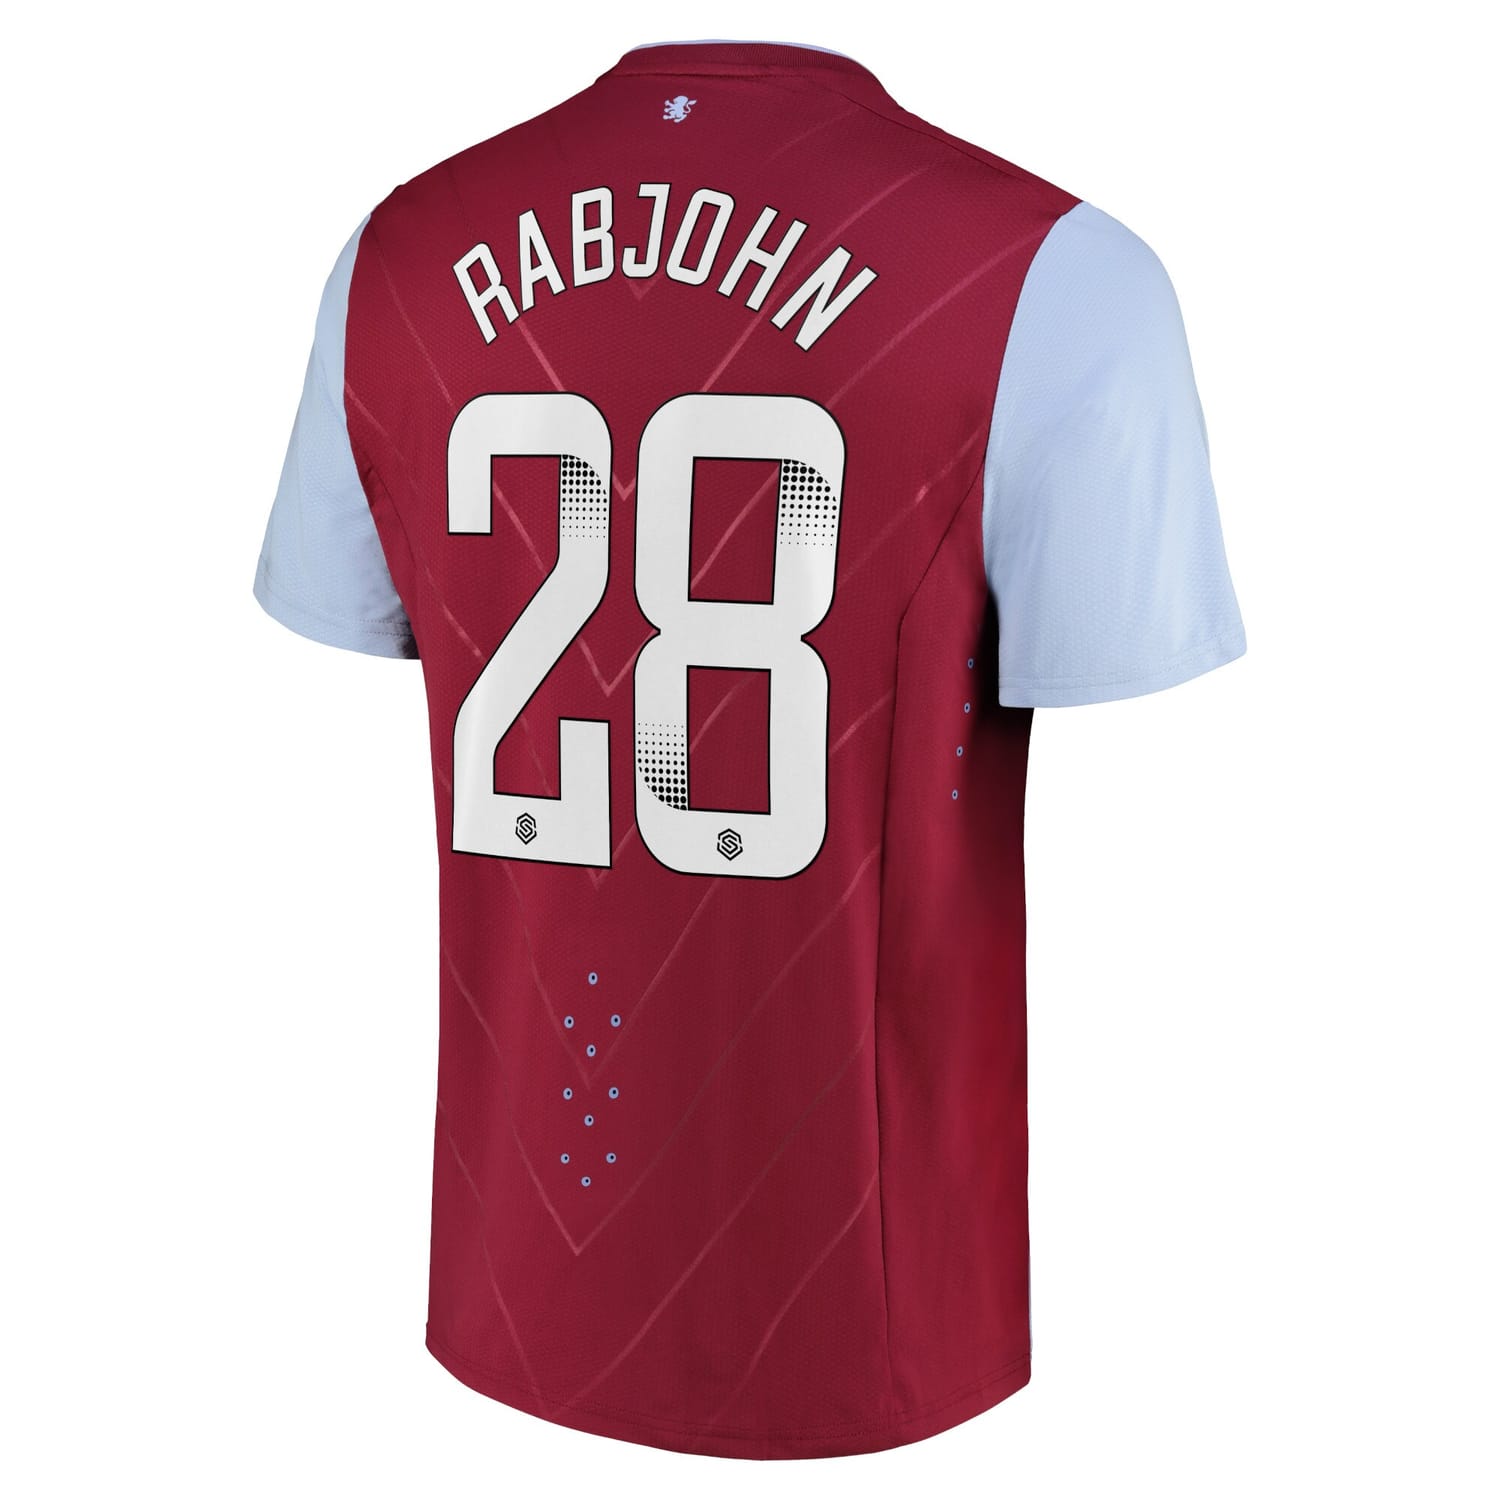 Premier League Aston Villa Home WSL Pro Jersey Shirt 2022-23 player Evie Rabjohn 28 printing for Men